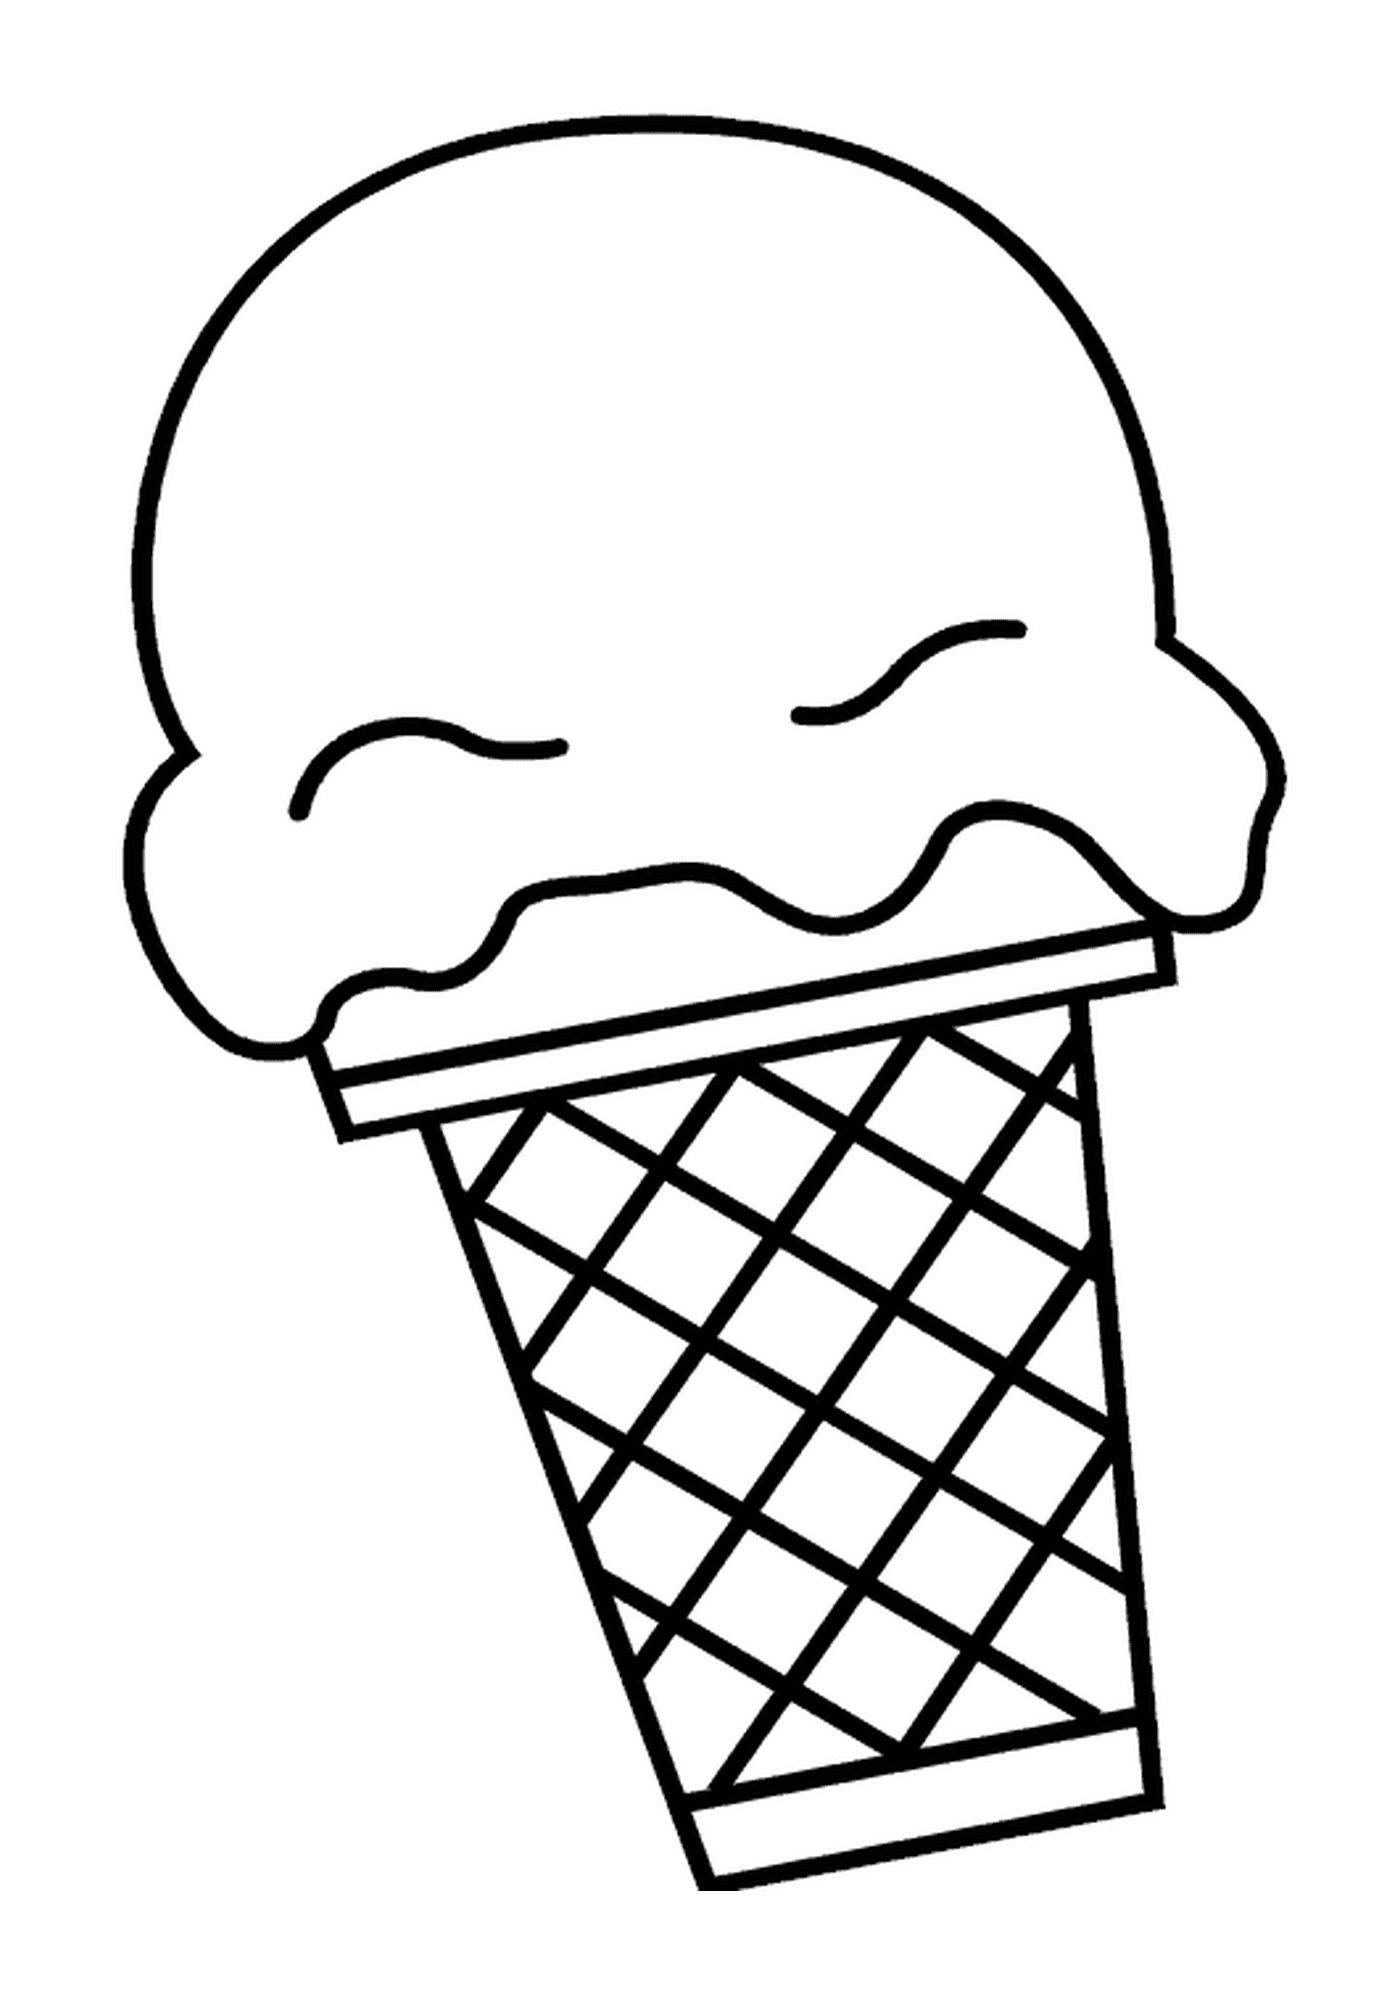  Un cono gelato con un morso 